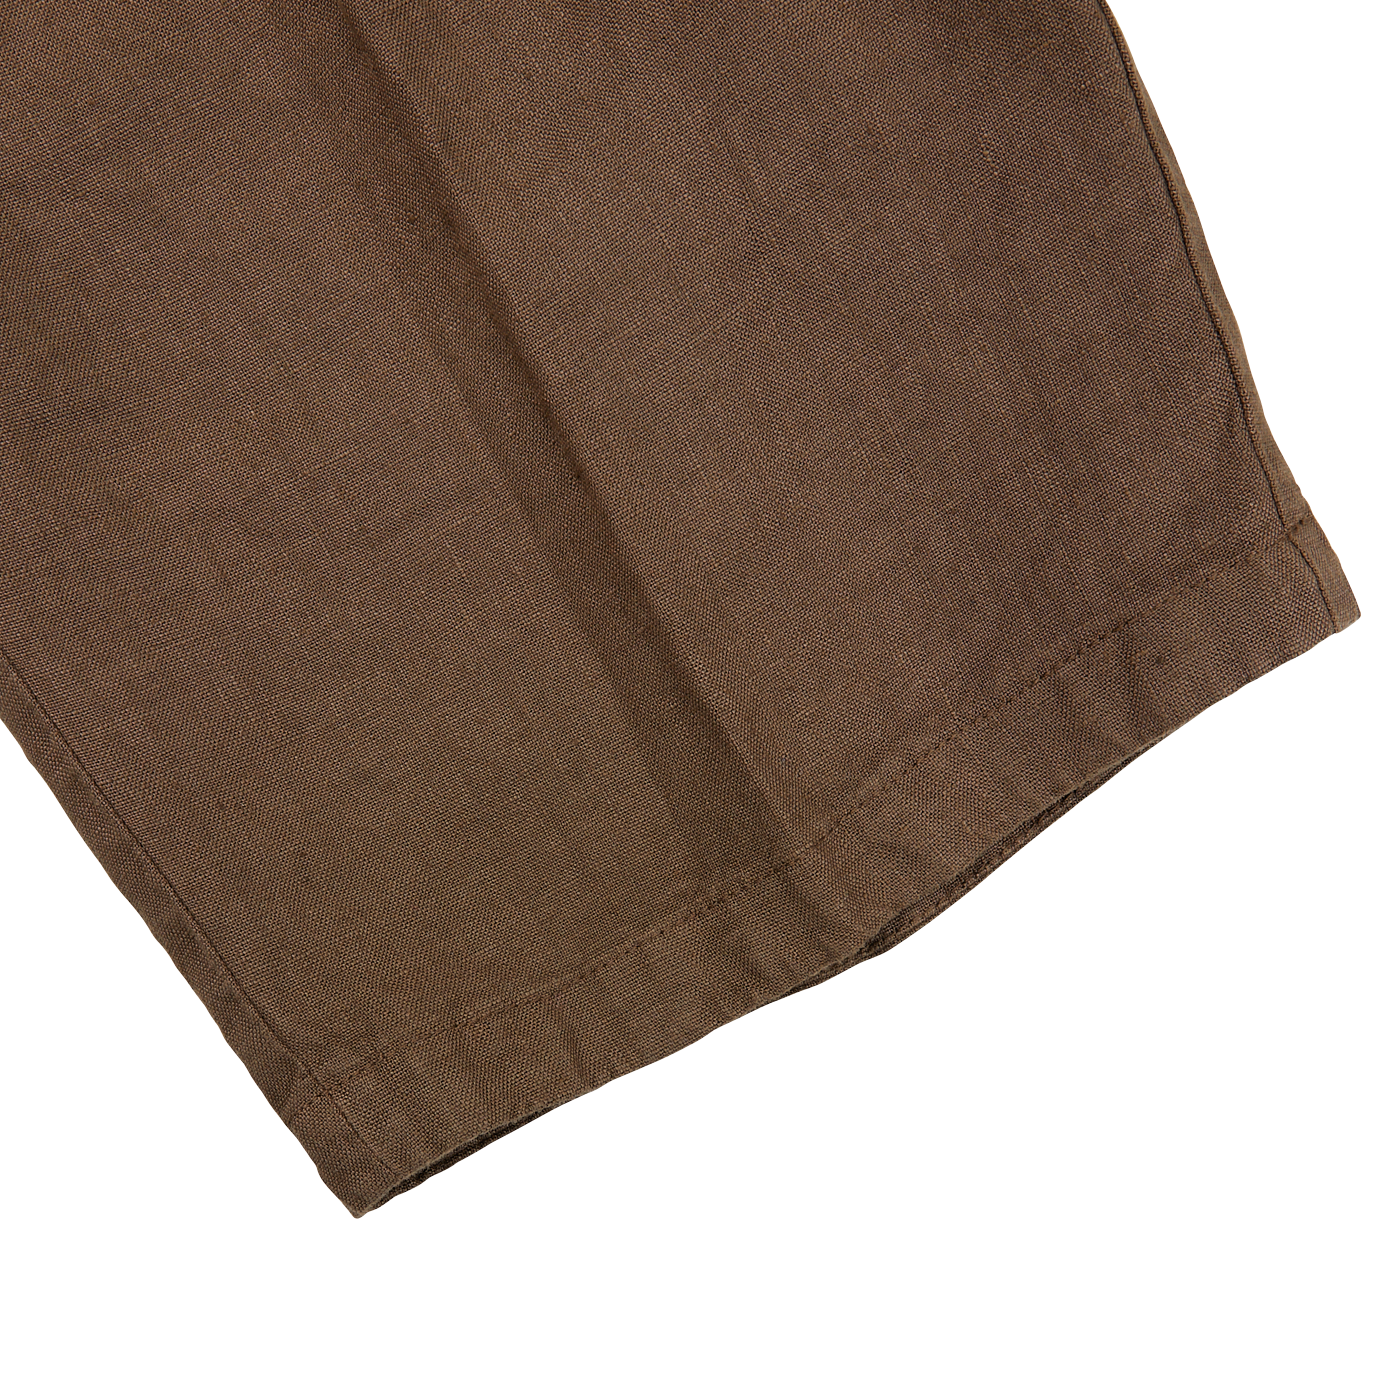 A close up of Tela Genova's Brown Linen Damasco Pleated Shorts.